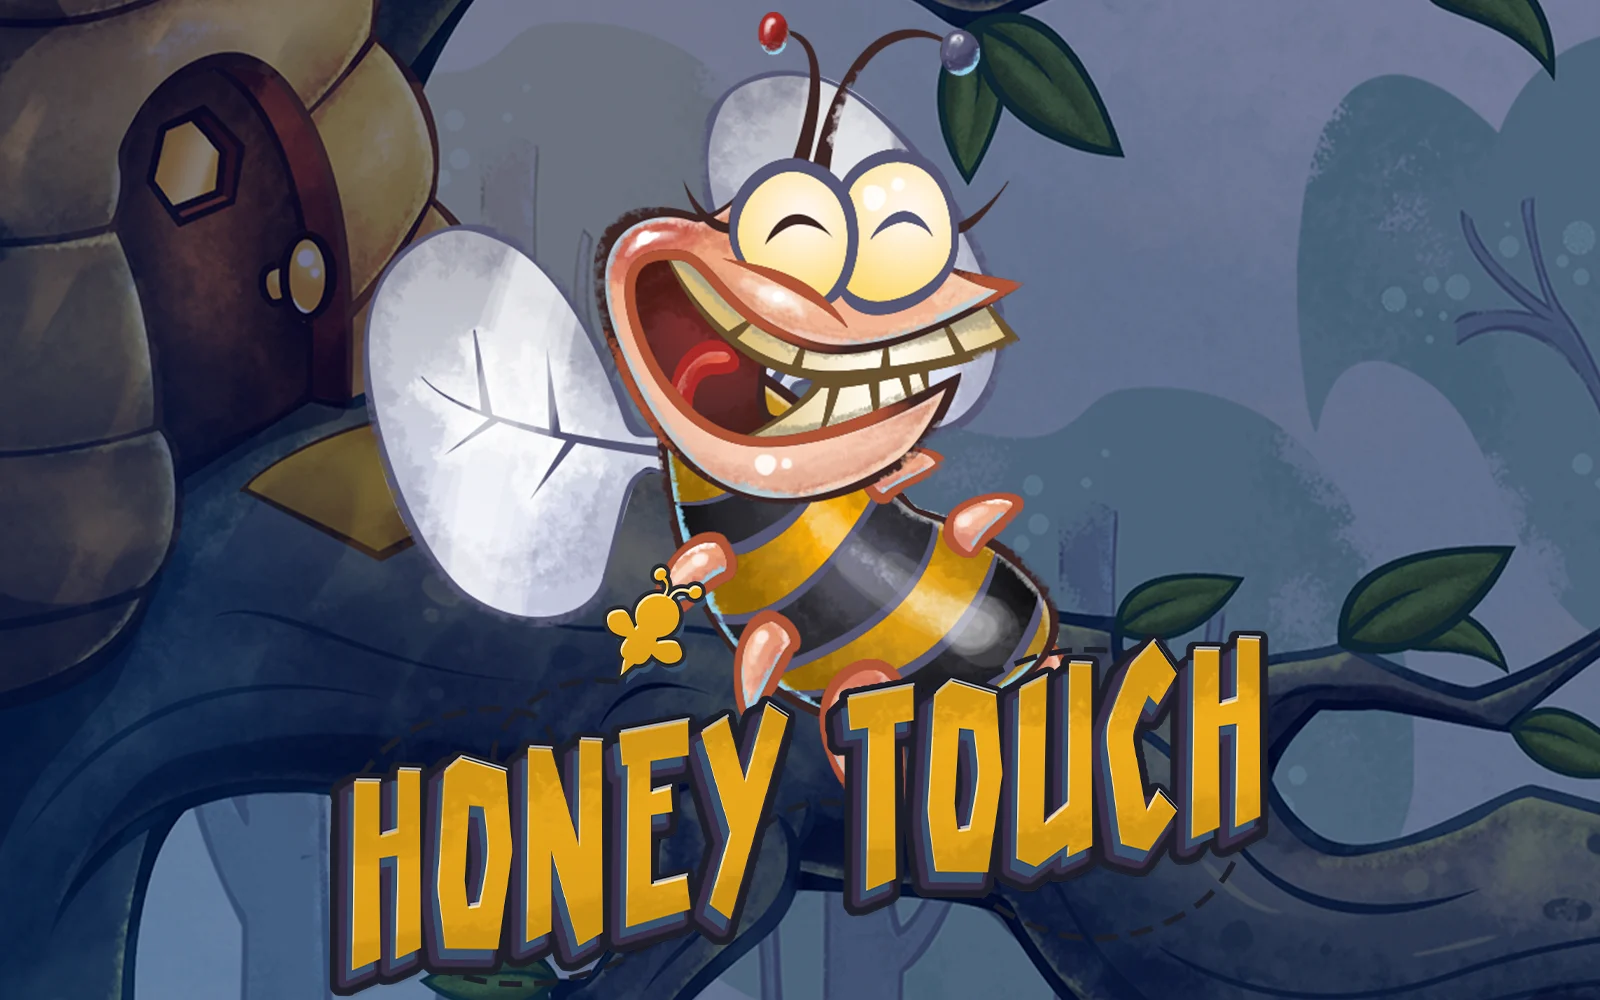 Play Honey Touch on Starcasino.be online casino